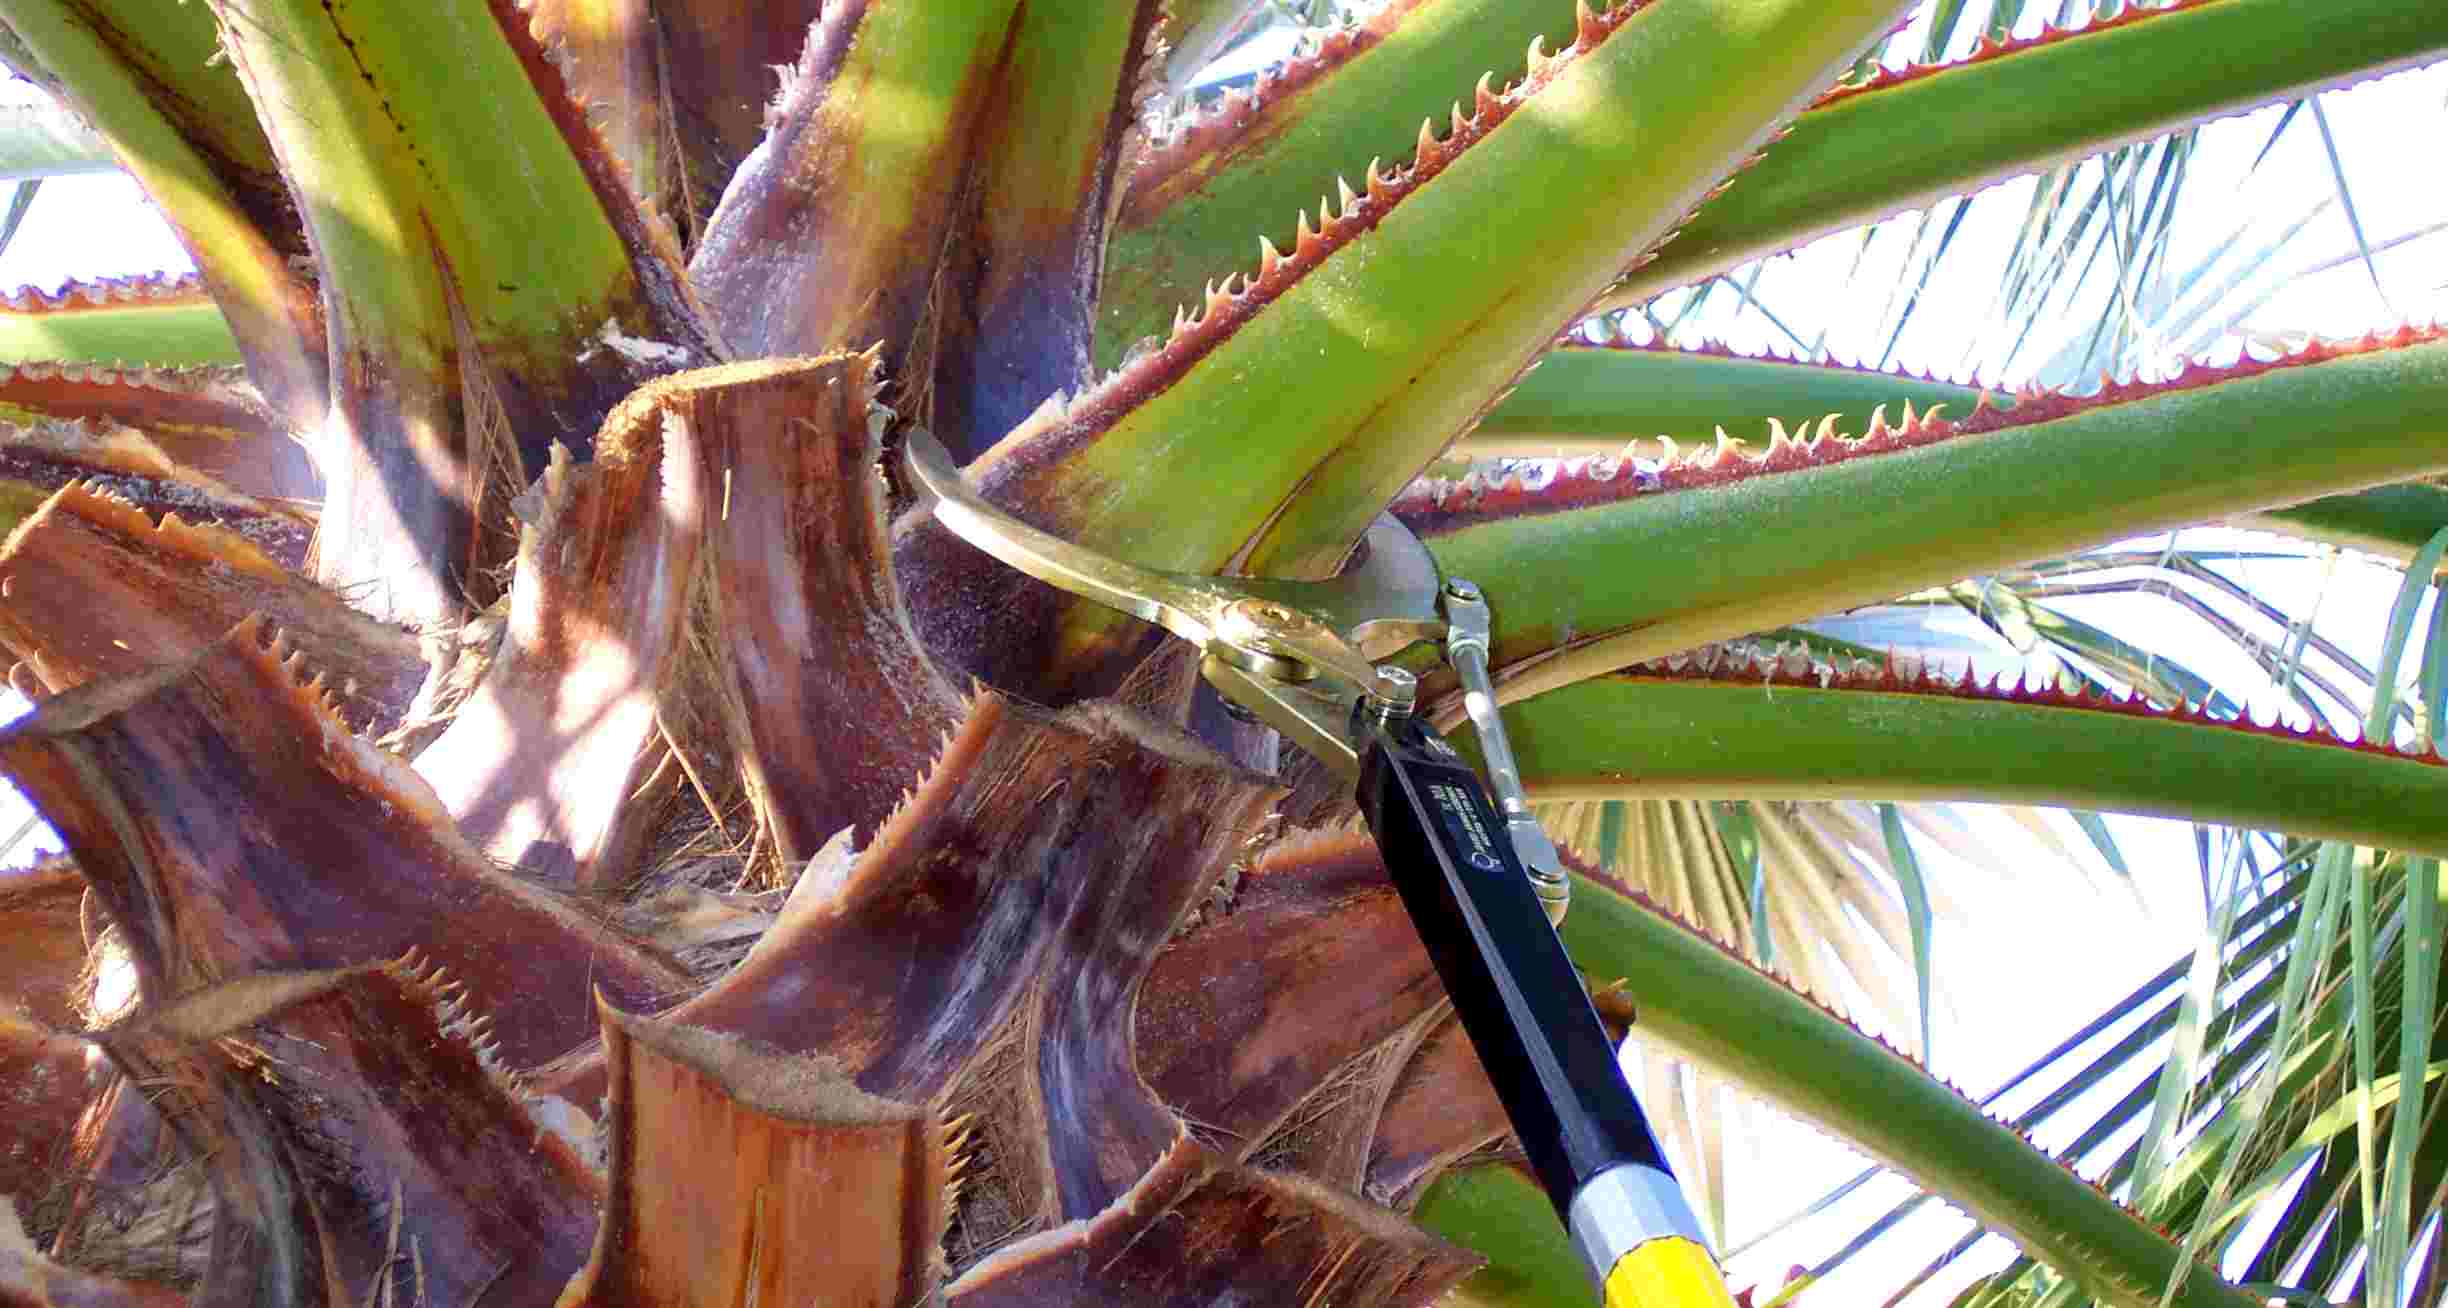 palm tree trimming equipment